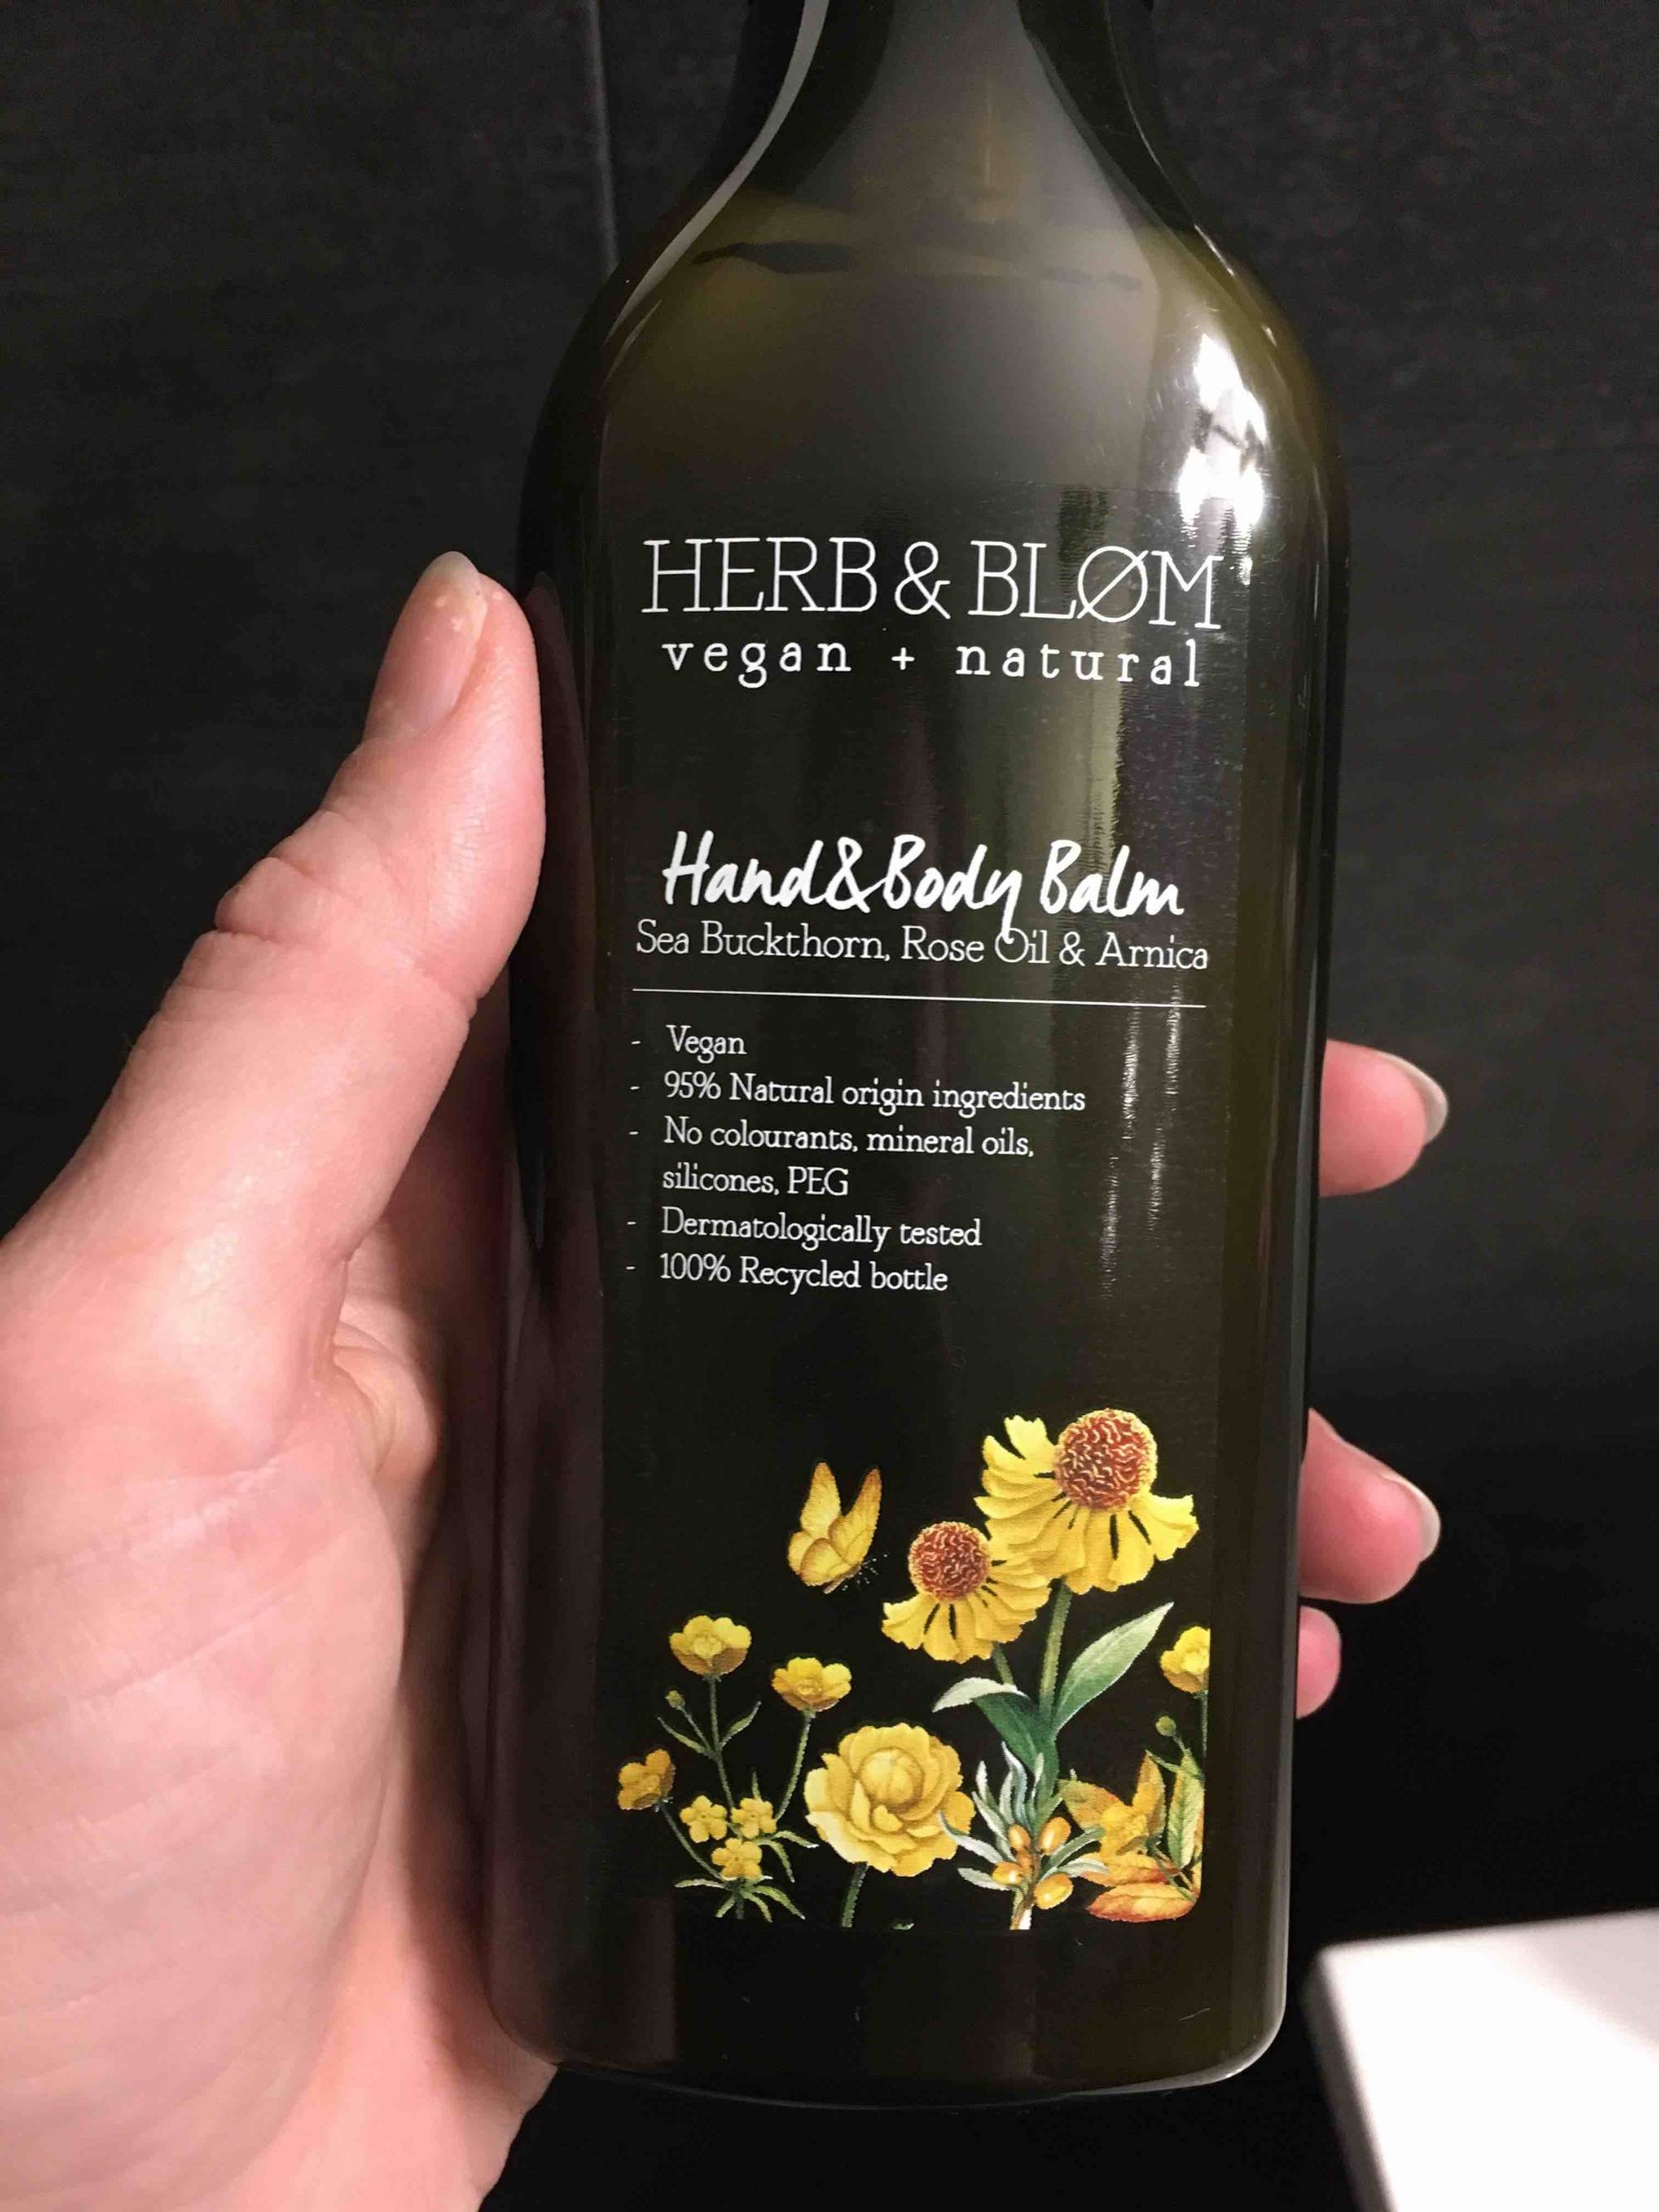 HERB & BLOM - Hand & body balm